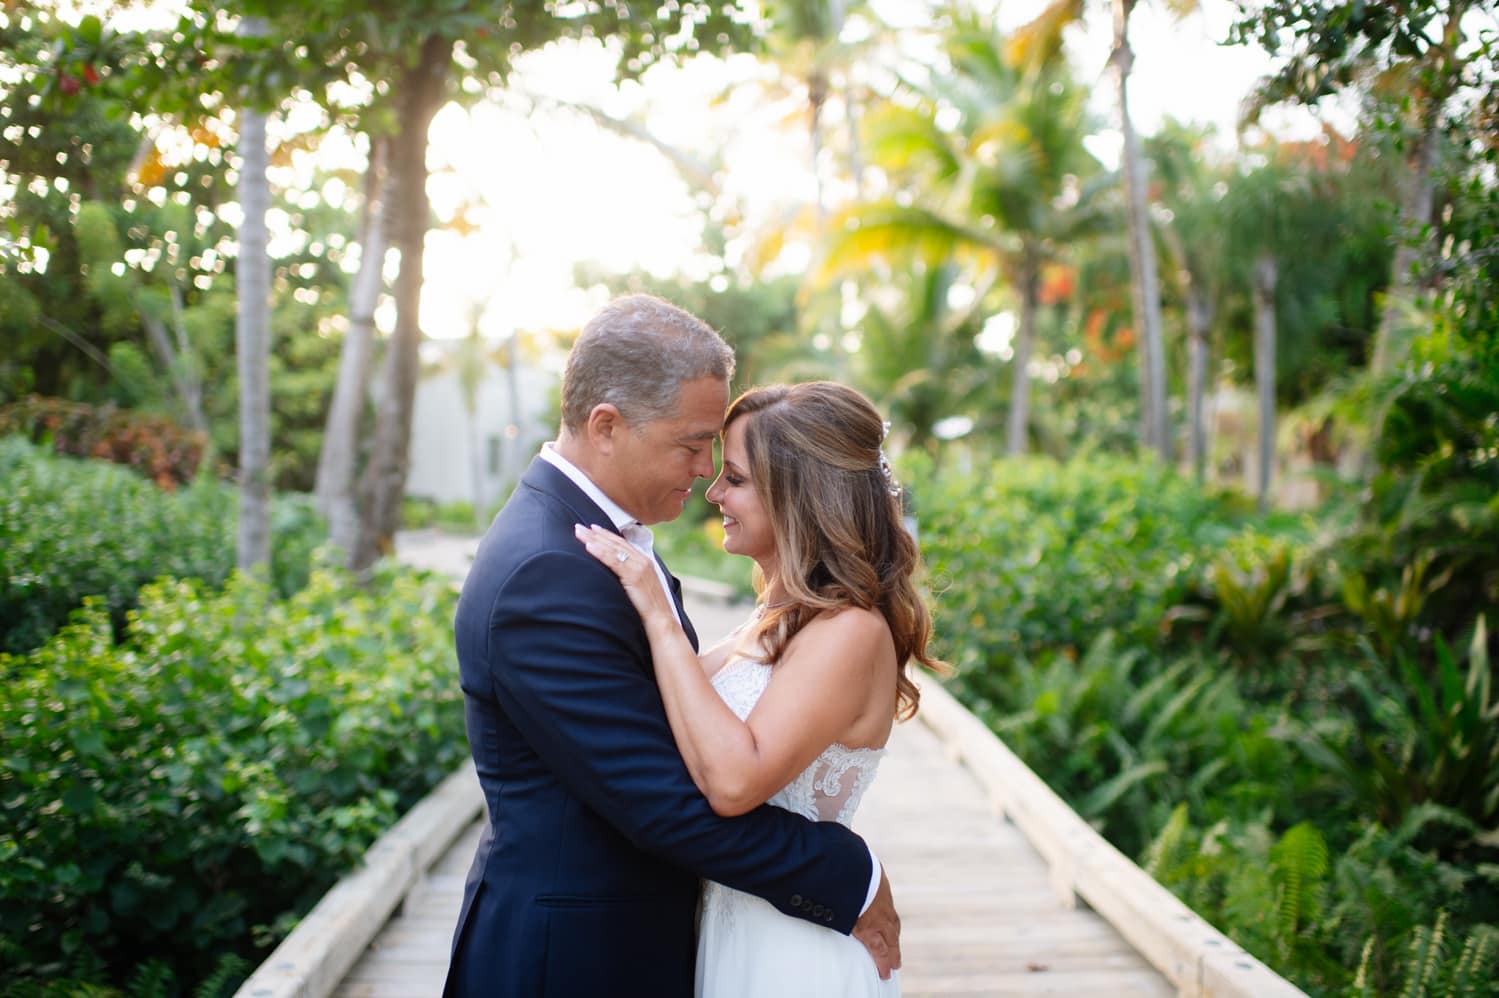 St regis resort elopement by Puerto Rico wedding photographer Camille Fontanez